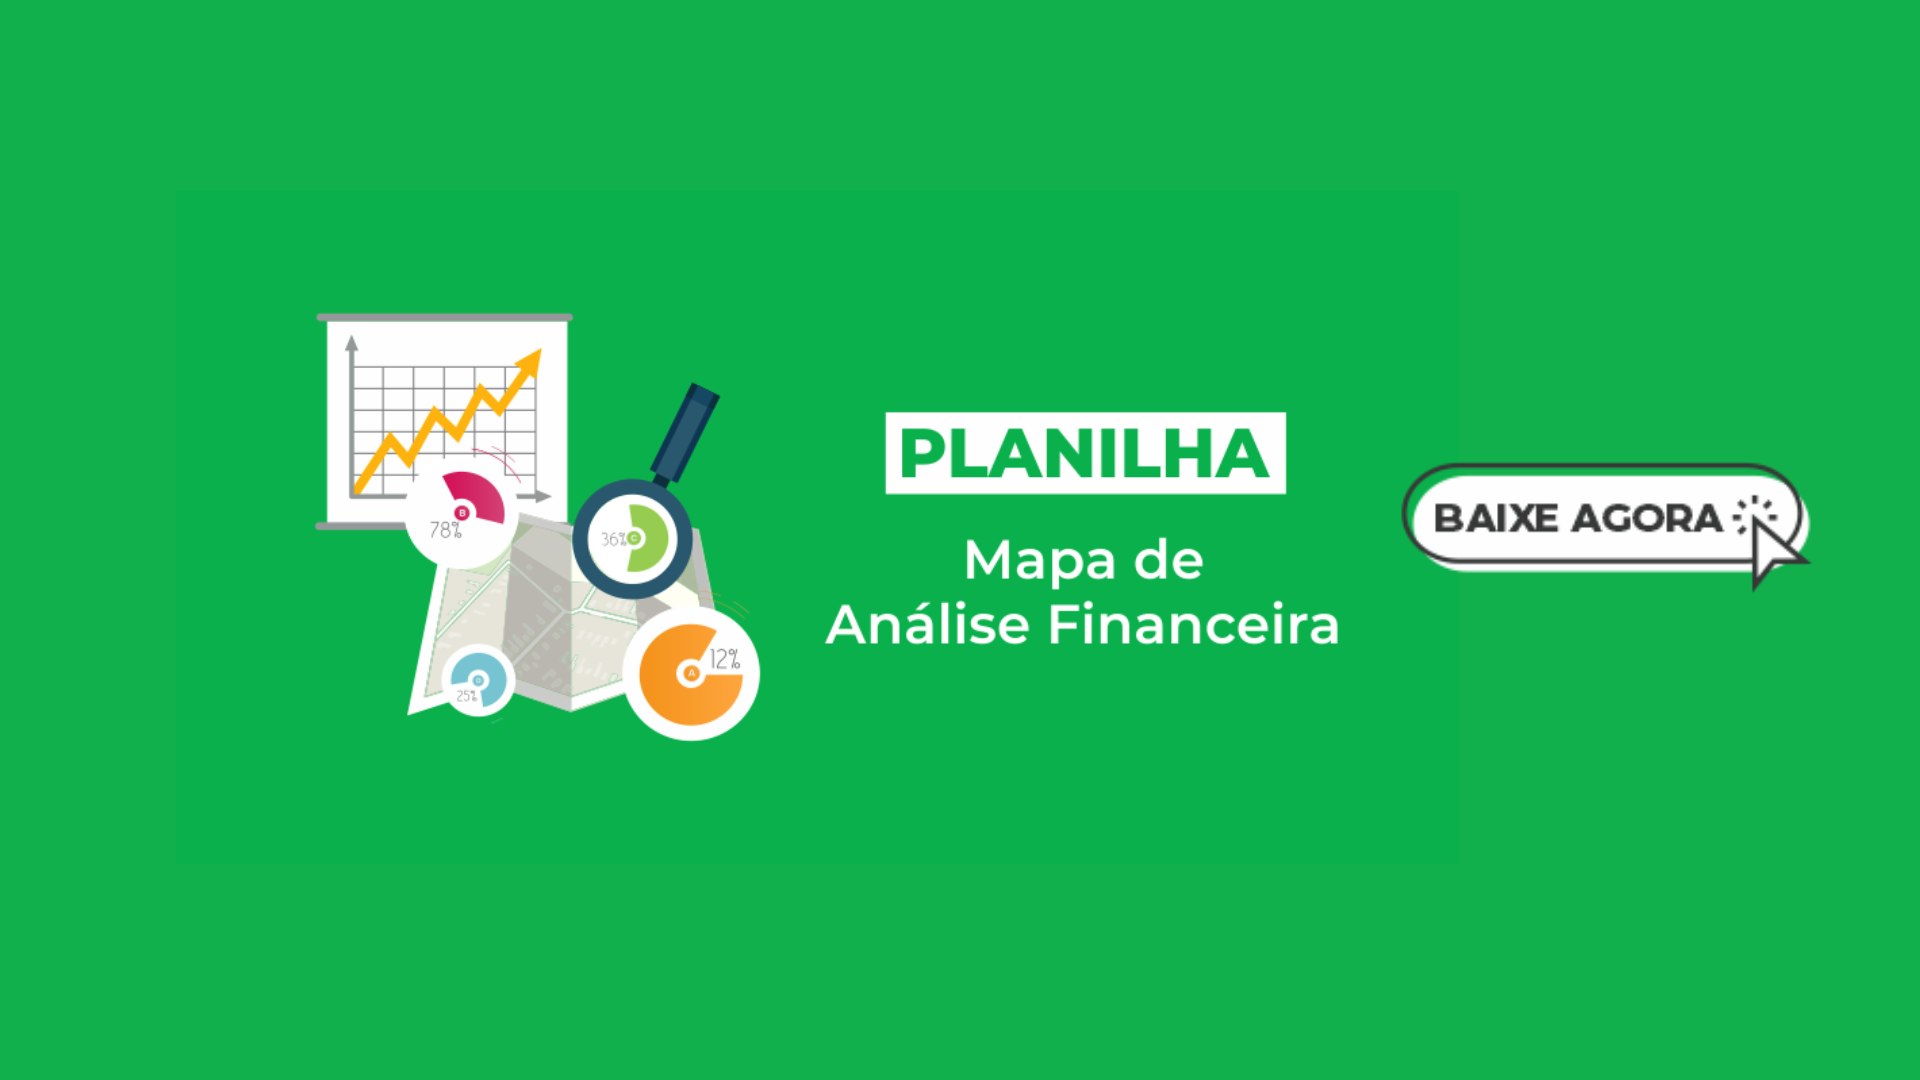 [Planilha] Mapa de Análise Financeira